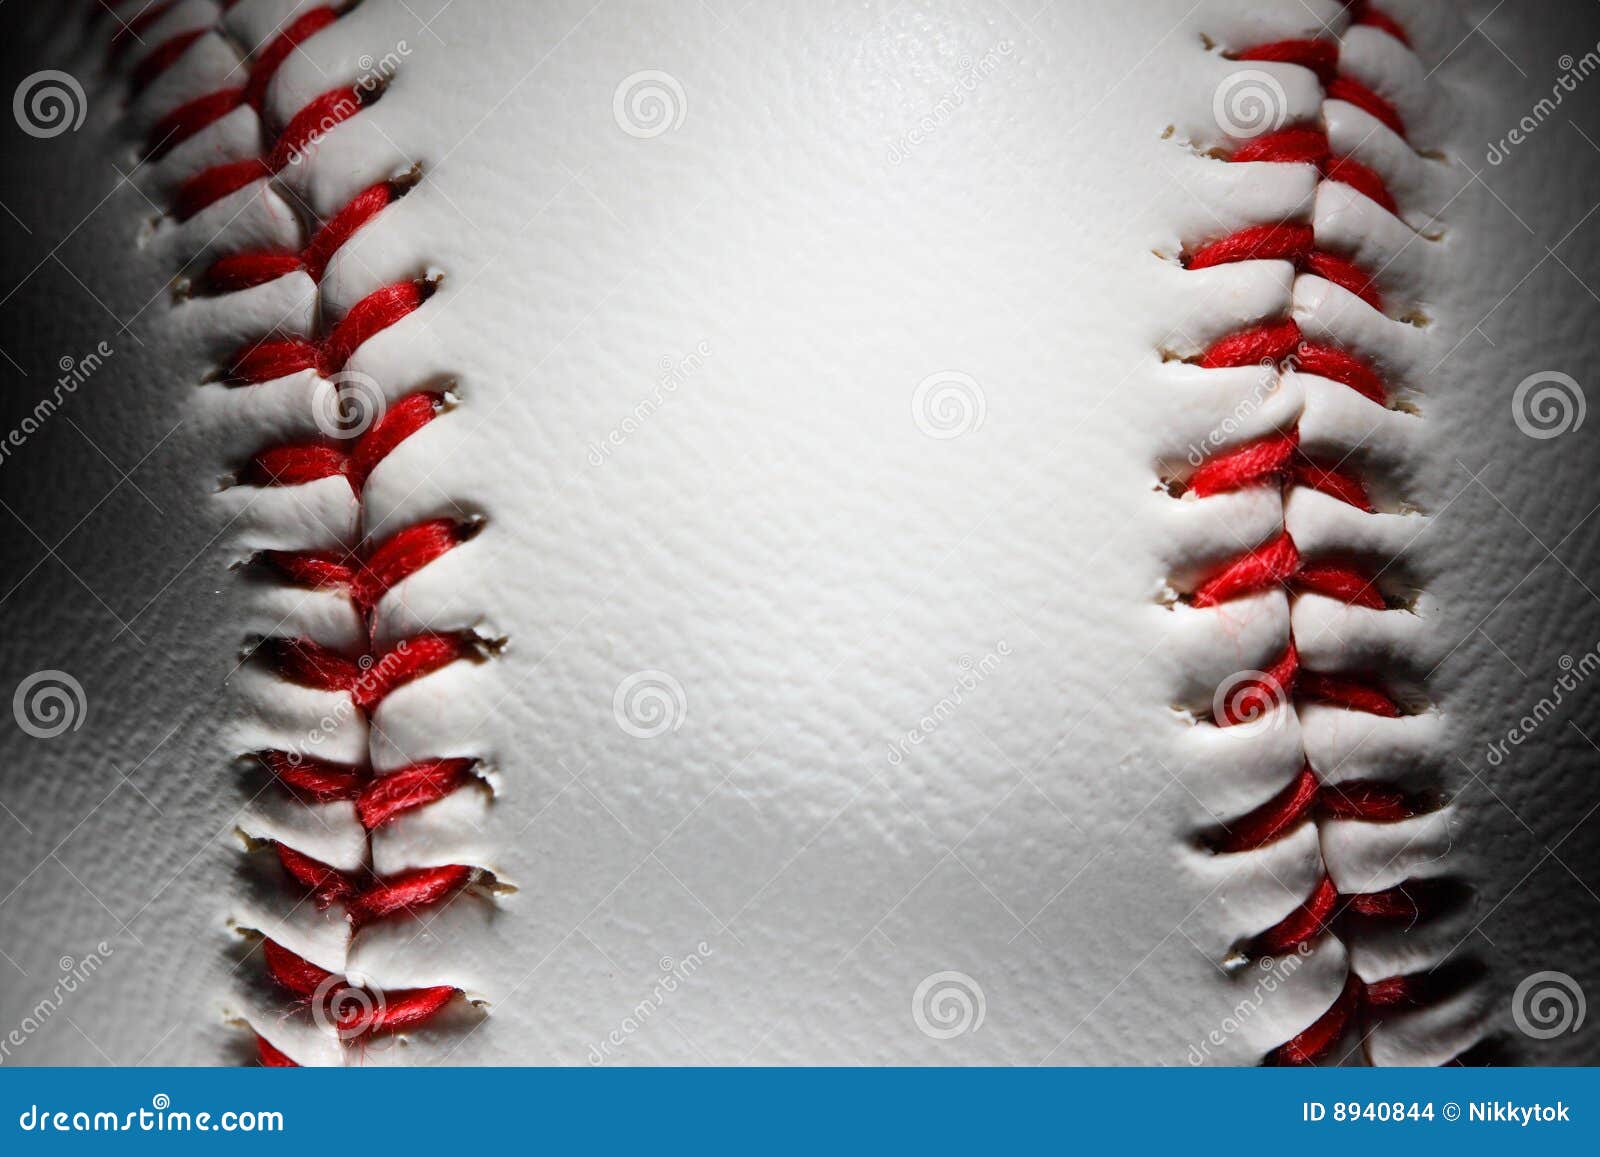 closeup of an baseball